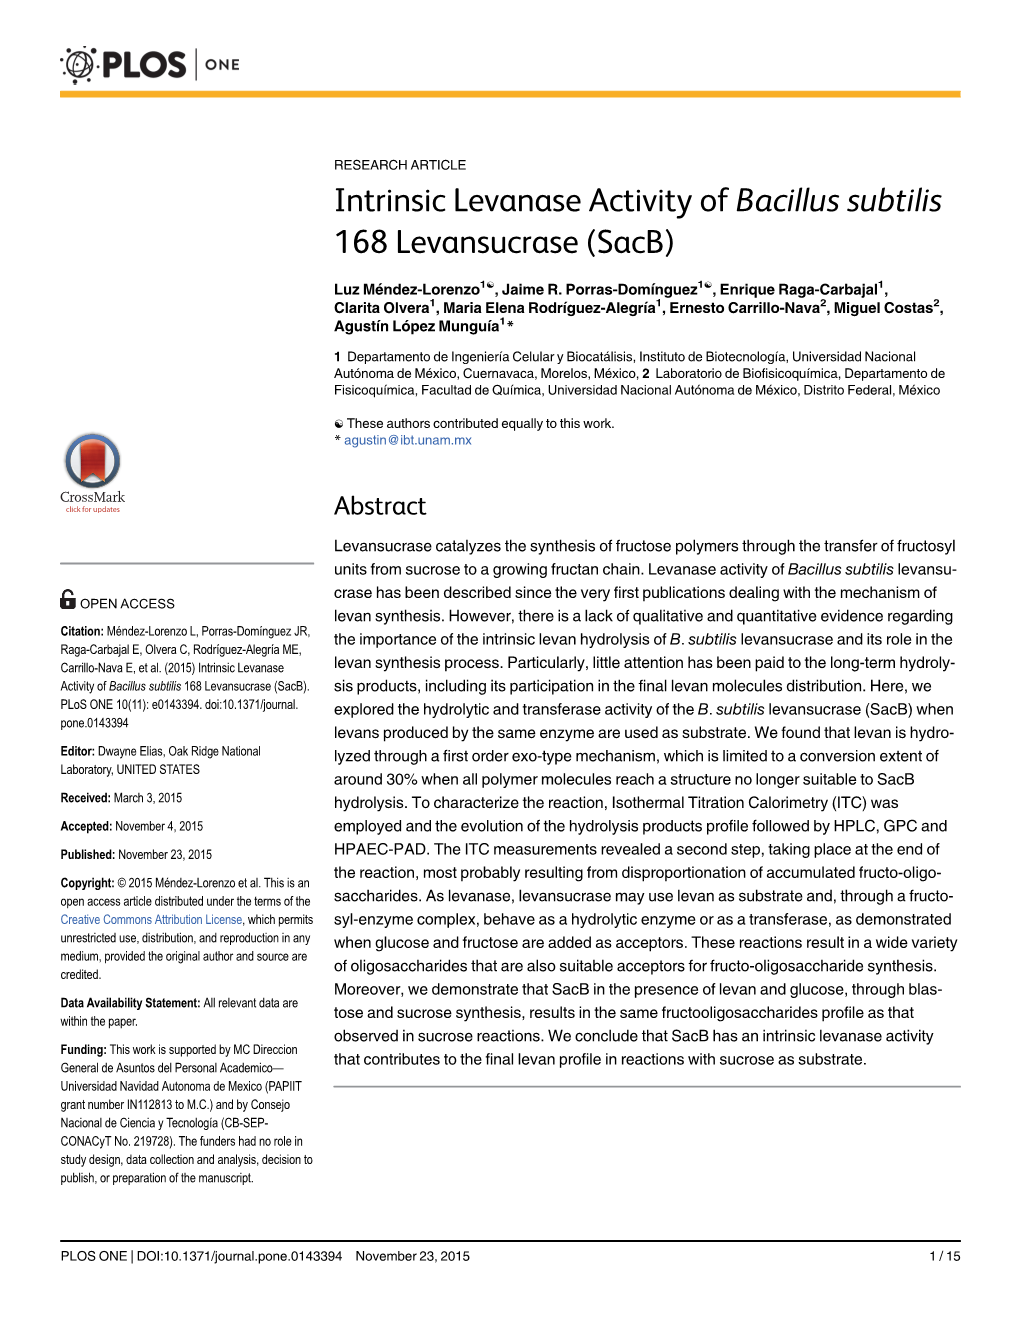 Intrinsic Levanase Activity of Bacillus Subtilis 168 Levansucrase (Sacb)